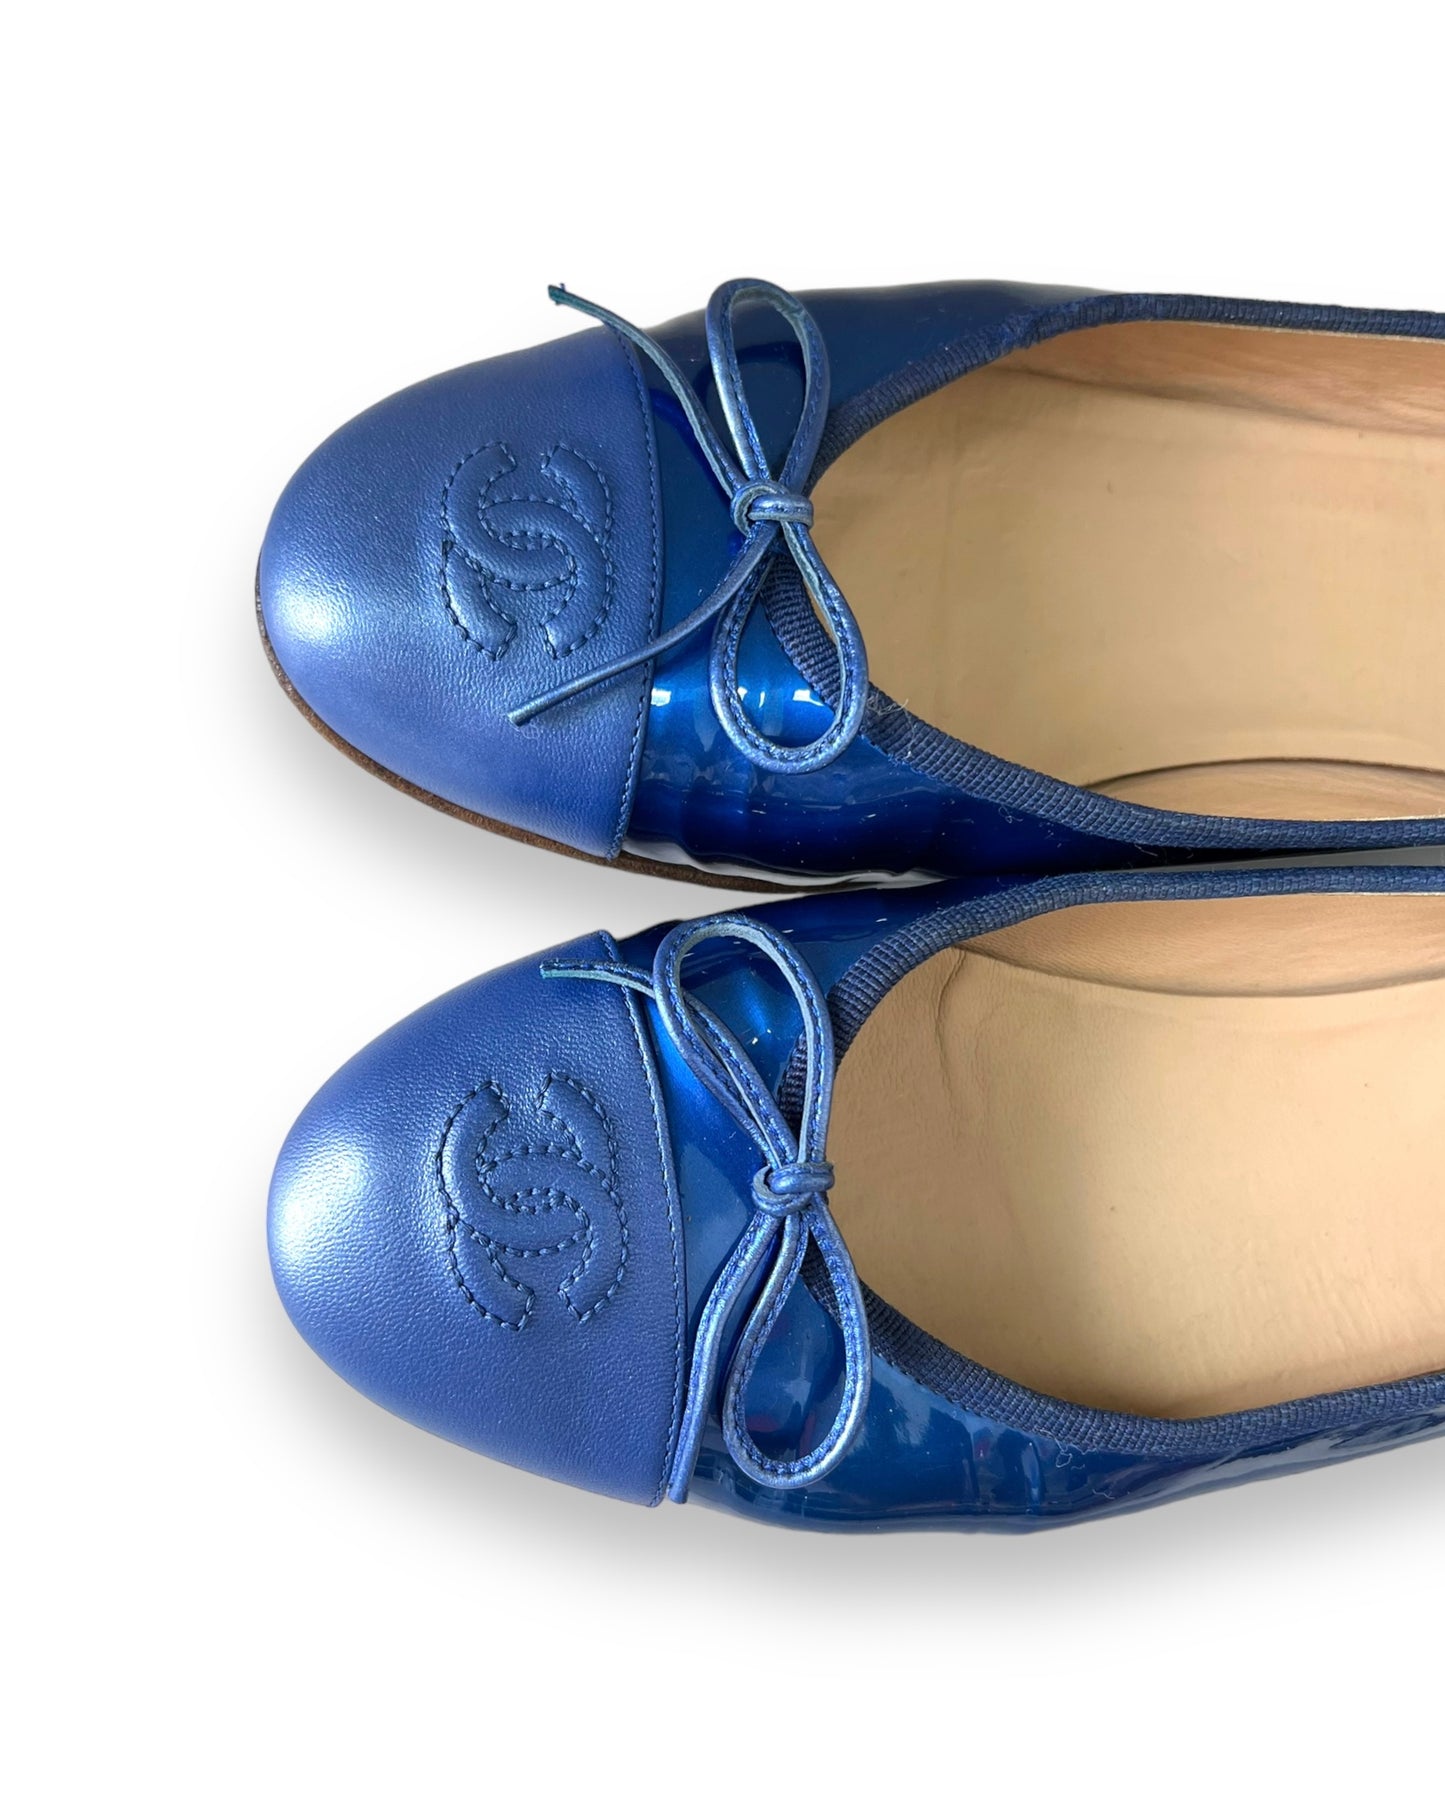 Chanel Patent Leather Ballet Flats Size 37 It (7 Us) – KMK Luxury